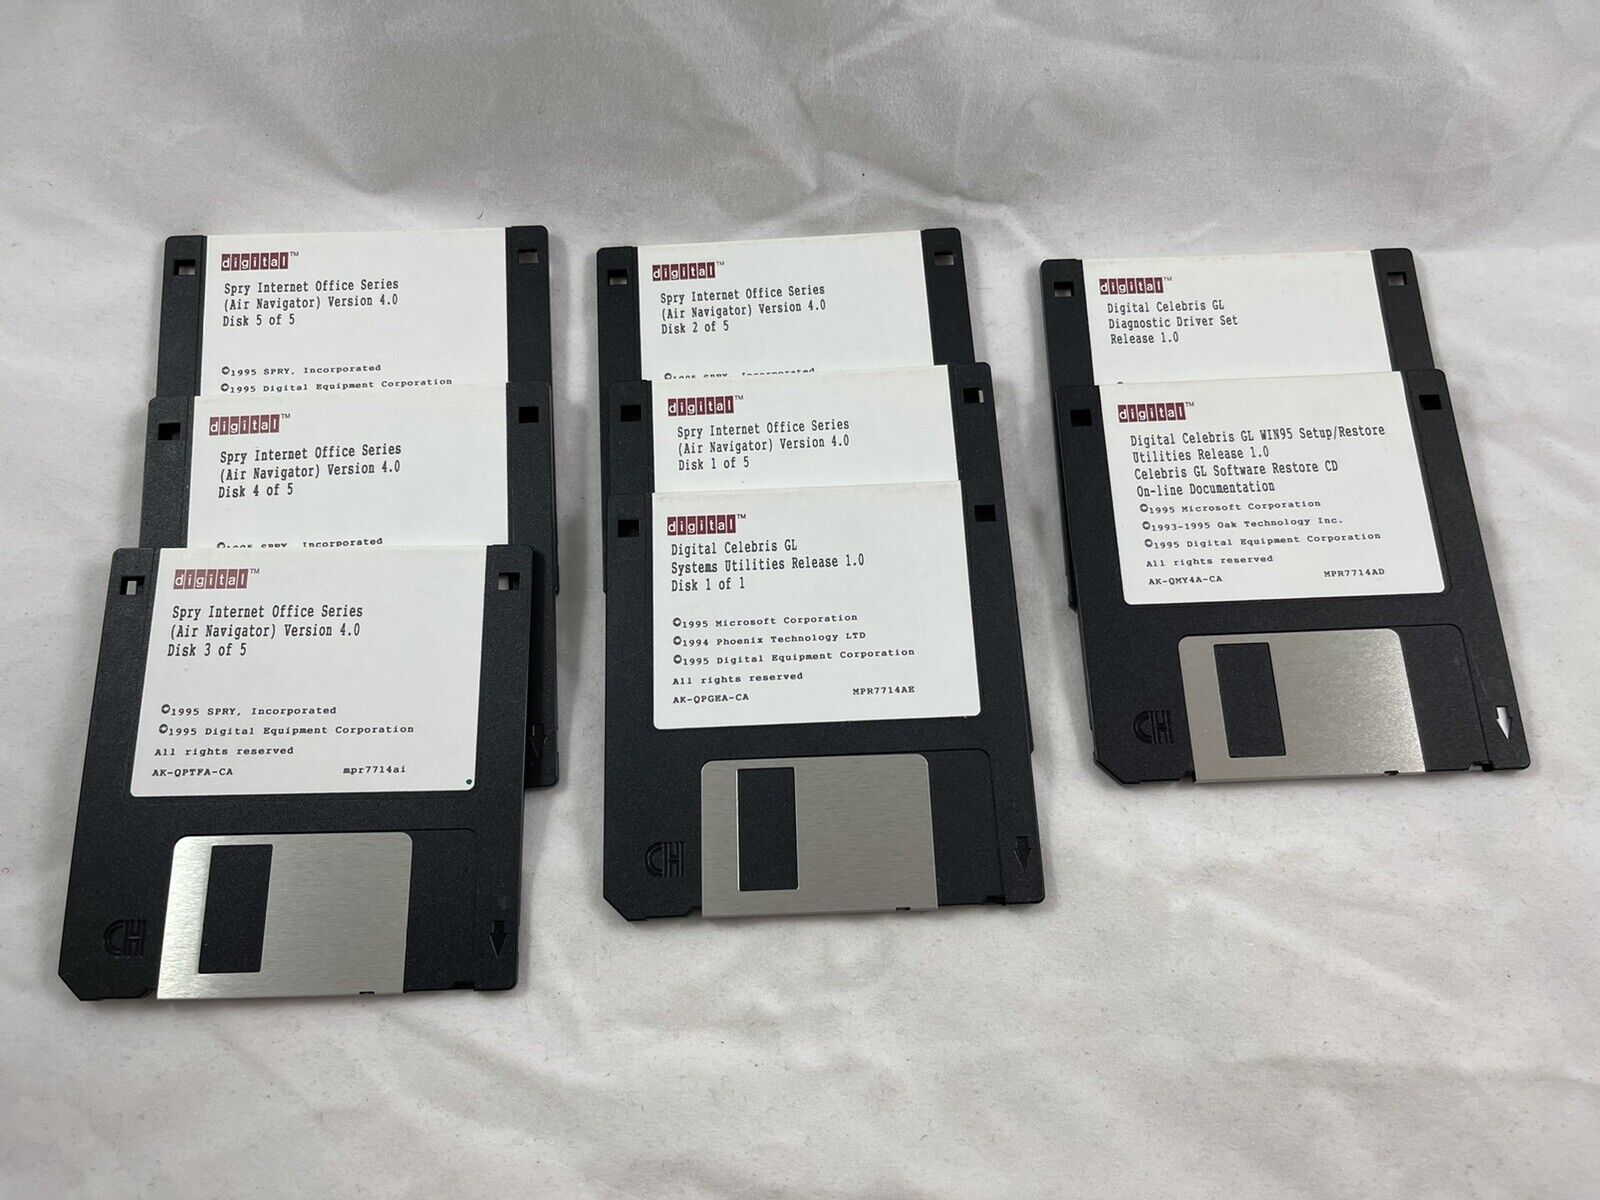 Rare Vtg Digital Celebris GL WIN95 Setup/restore 1995 Microsoft Corp 3.5 Floppy